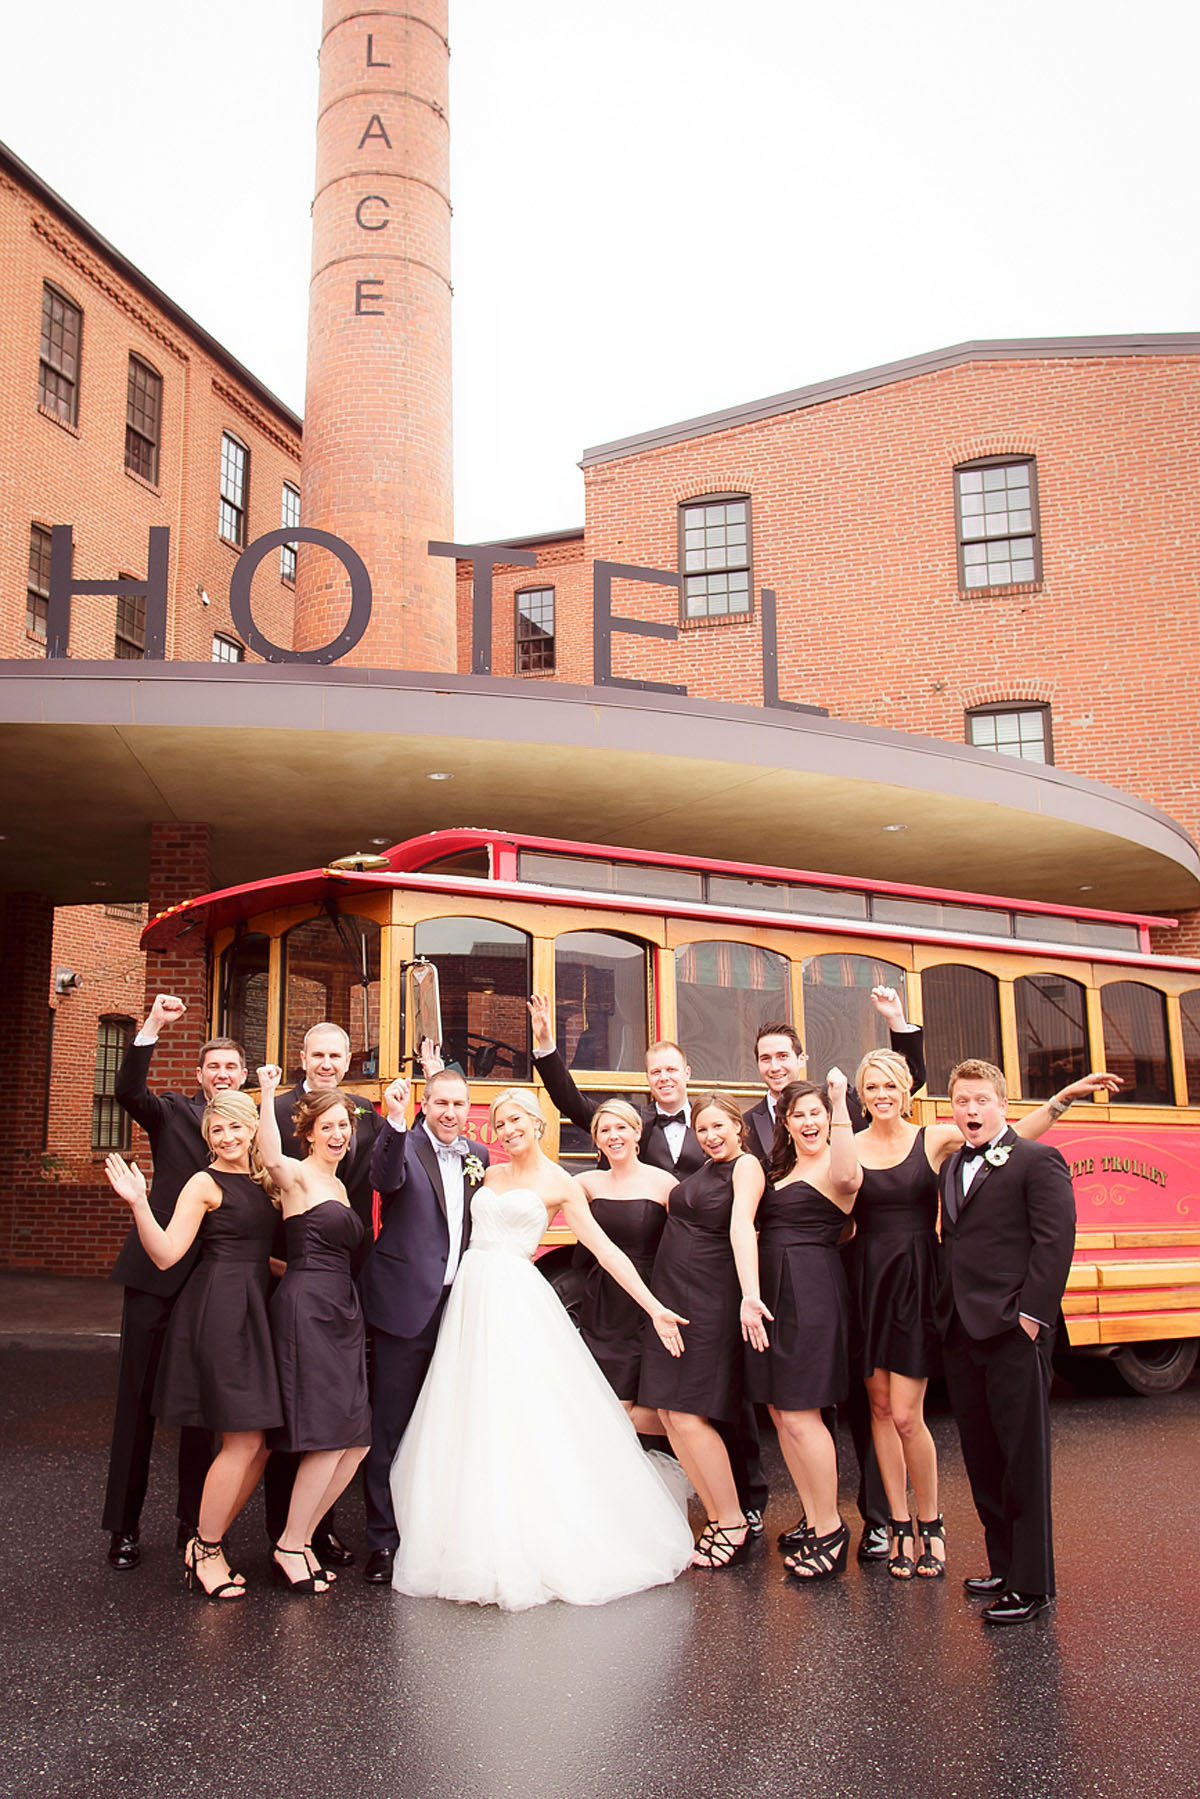 Cork Factory Hotel Wedding in Lancaster PA